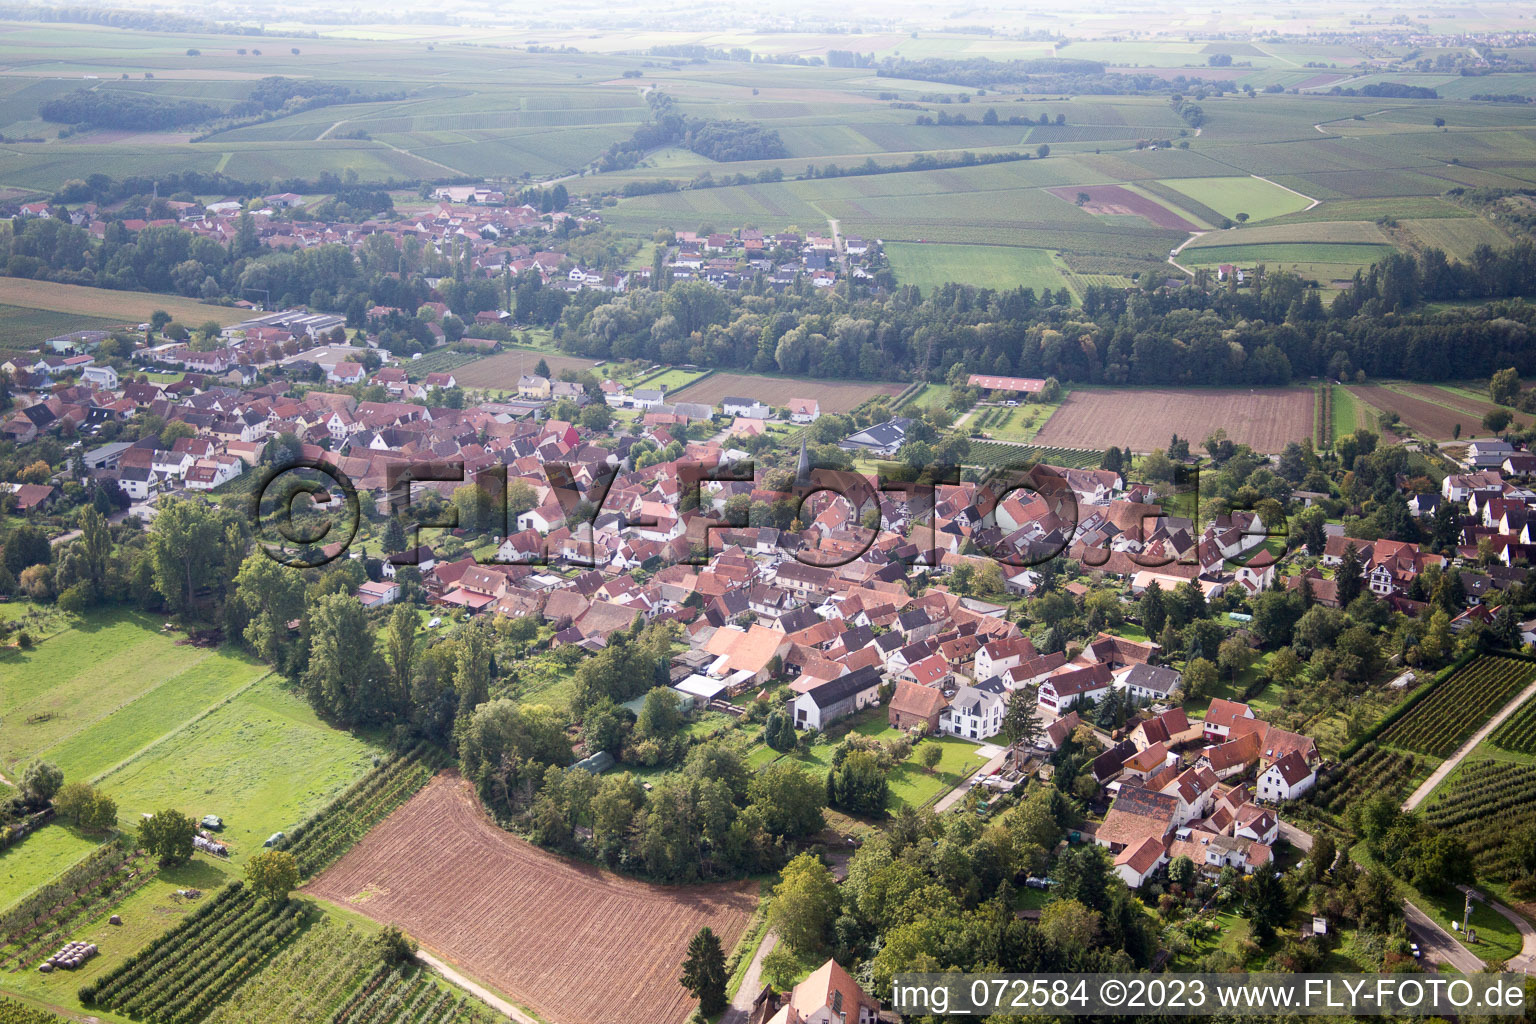 Photographie aérienne de Quartier Heuchelheim in Heuchelheim-Klingen dans le département Rhénanie-Palatinat, Allemagne